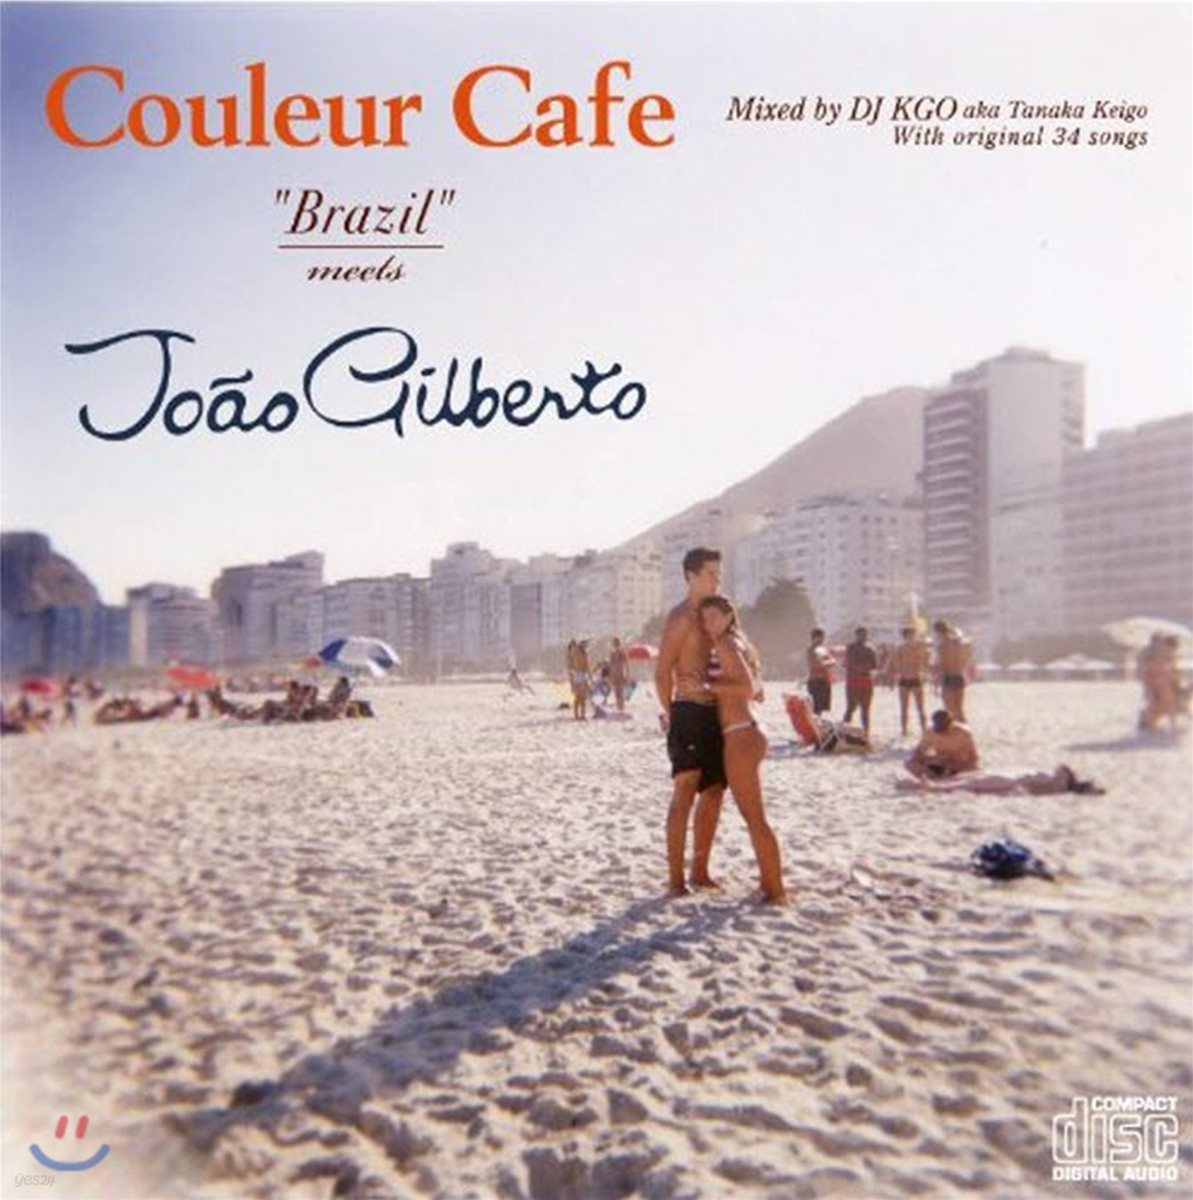 Couleur Cafe - Brazil Meets Joao Gilberto: Mixed by DJ KGO (쿨레르 카페 시리즈 - 브라질 미츠 주앙 질베르투)